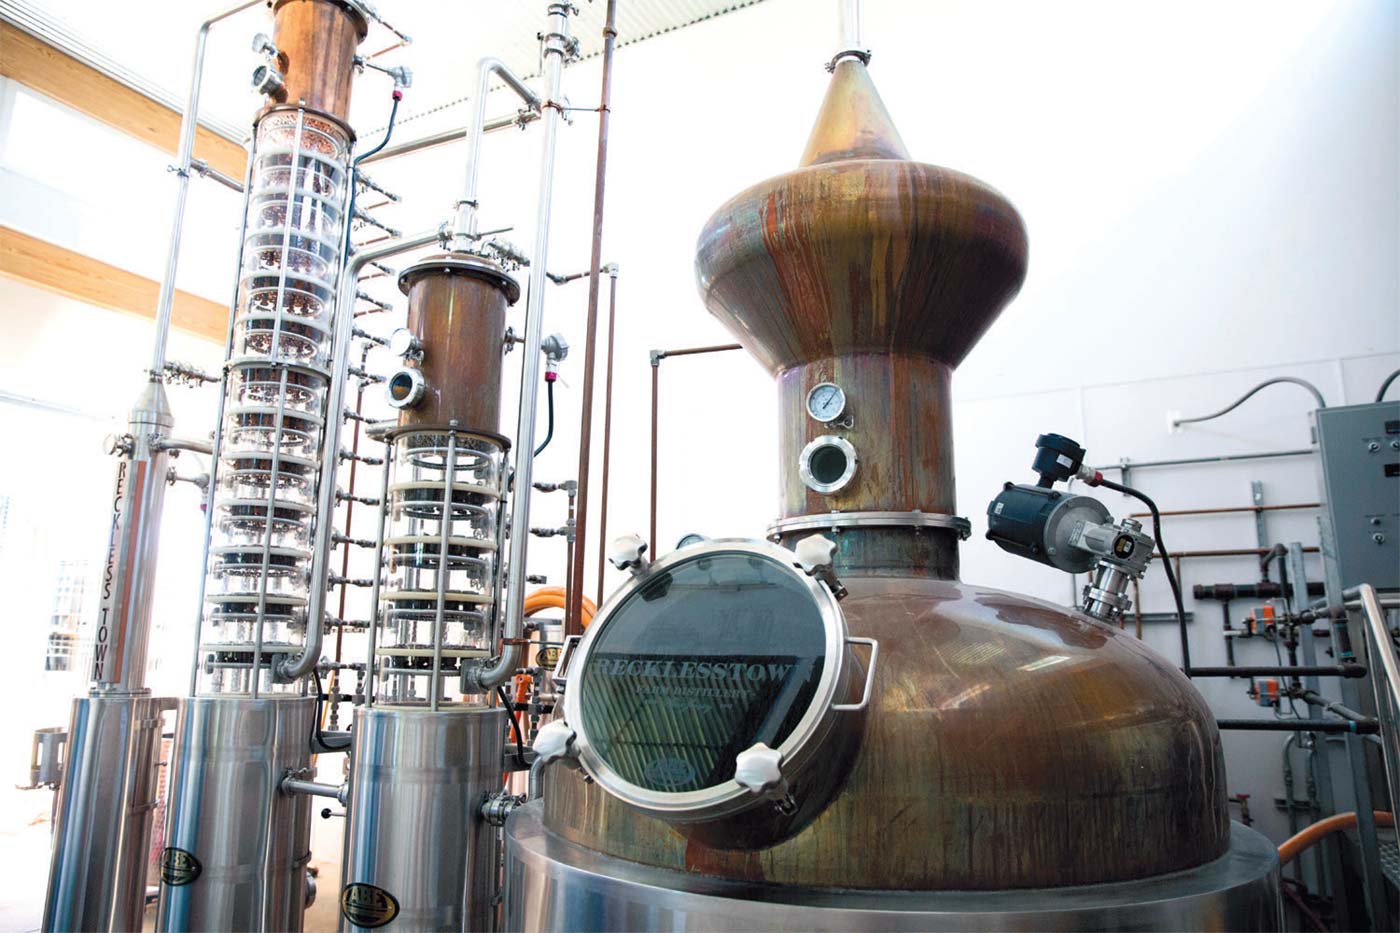 distilling equipment at Recklesstown Distillery